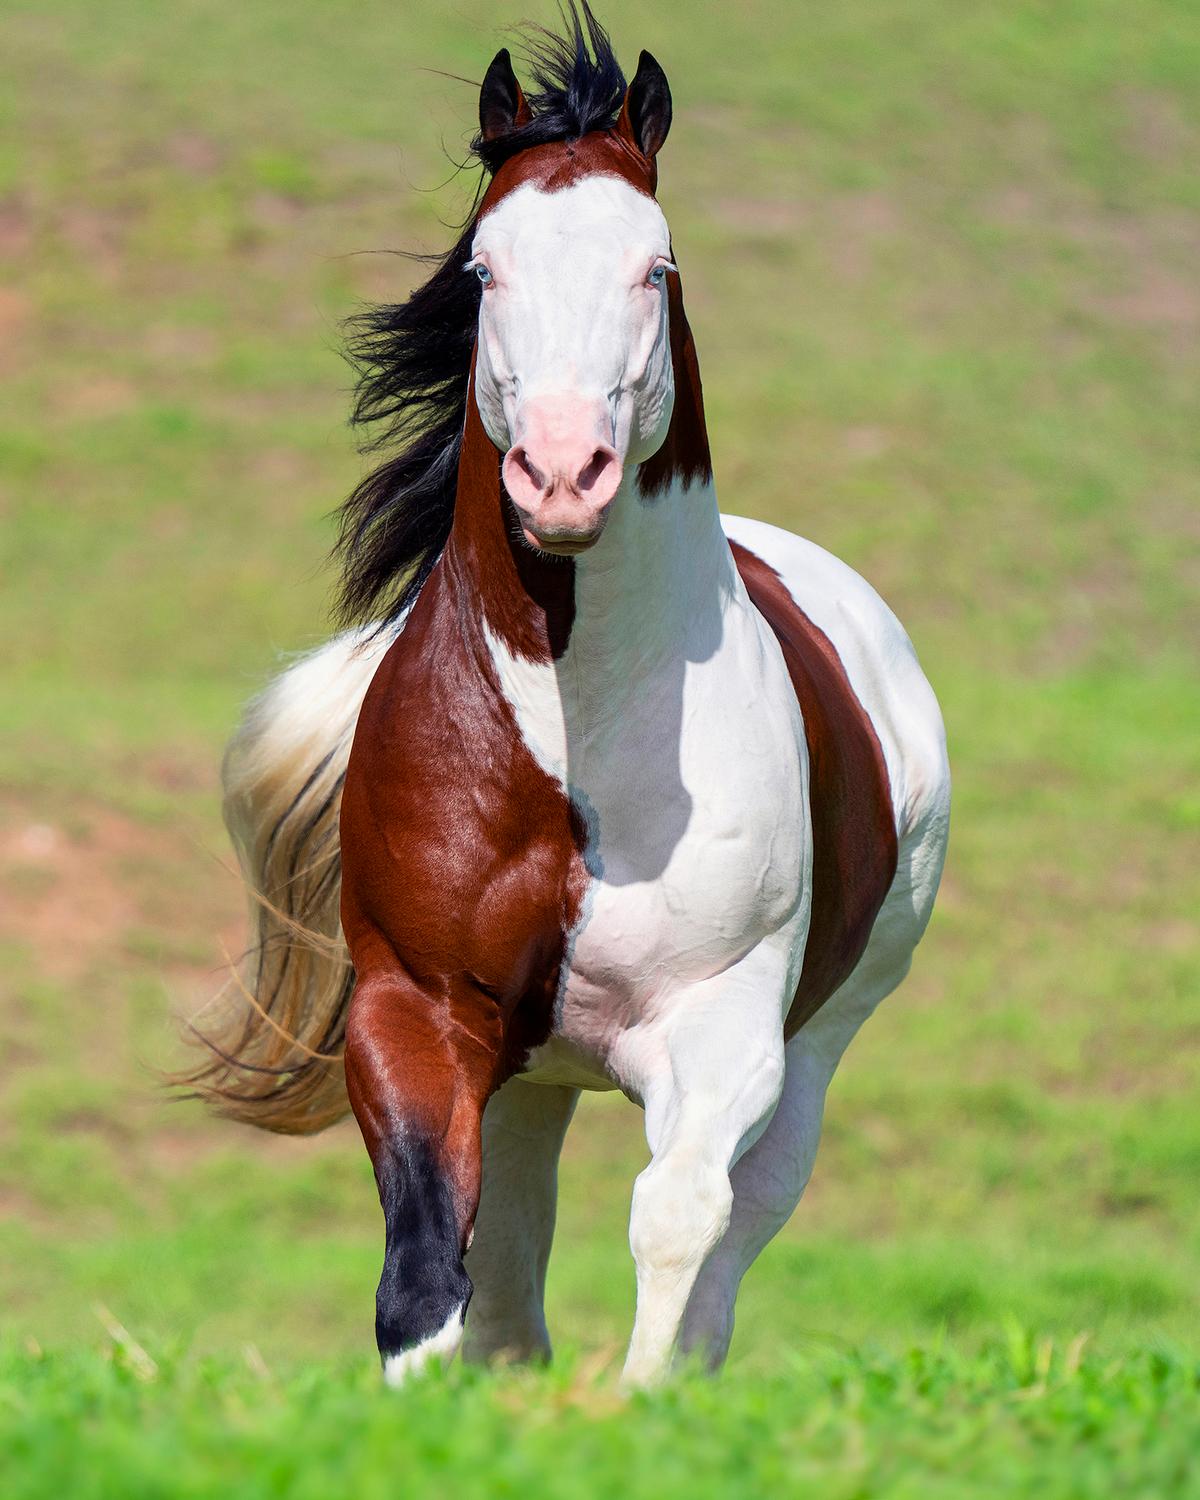 Splash Horse. (Courtesy of <a href="https://www.instagram.com/tonymendesphotography/">Tony Mendes</a>)